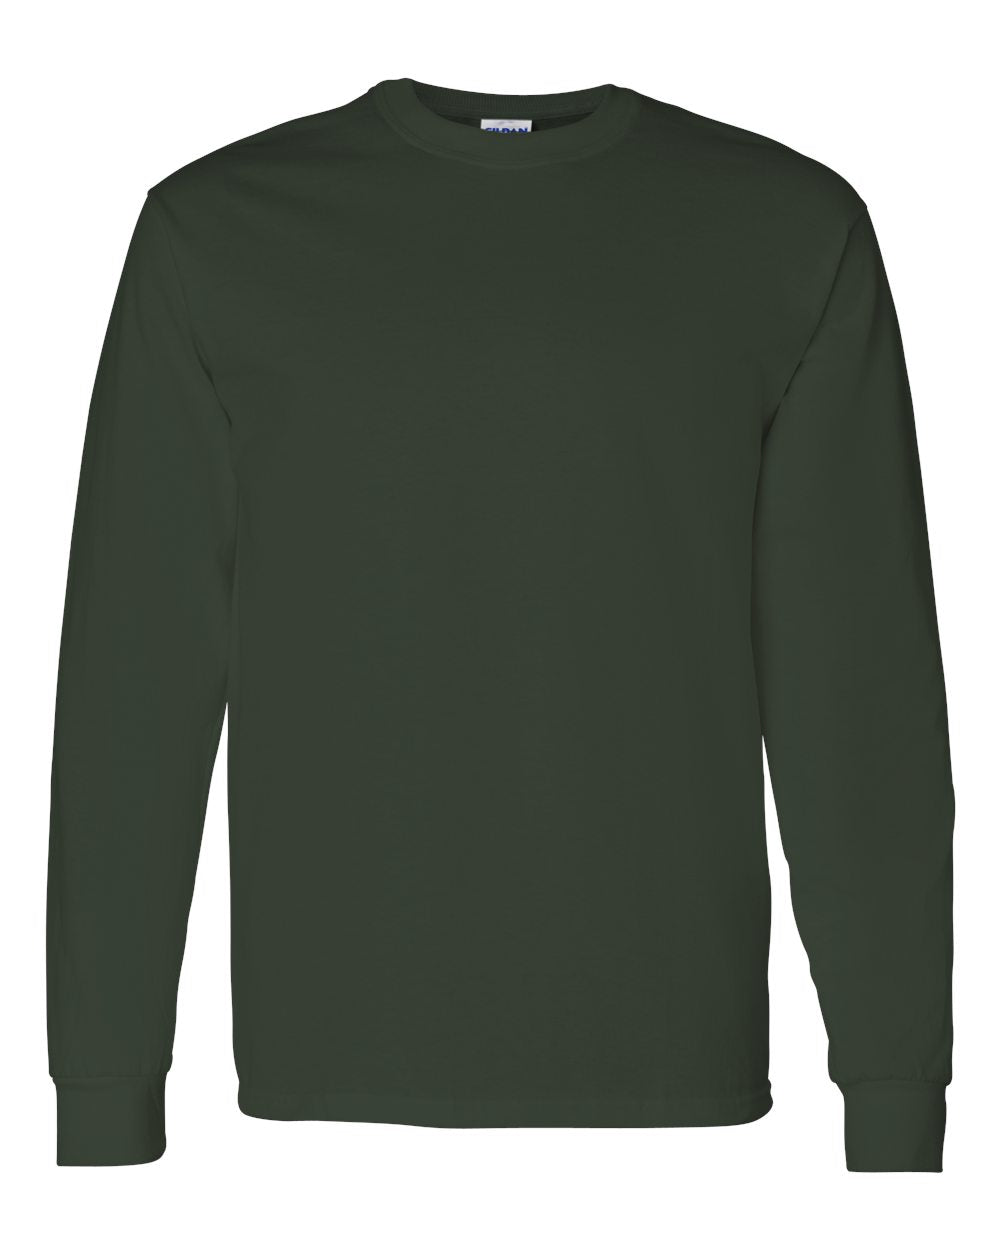 Pretreated Gildan 5400 Heavy Cotton Long Sleeve T-Shirt - Forest